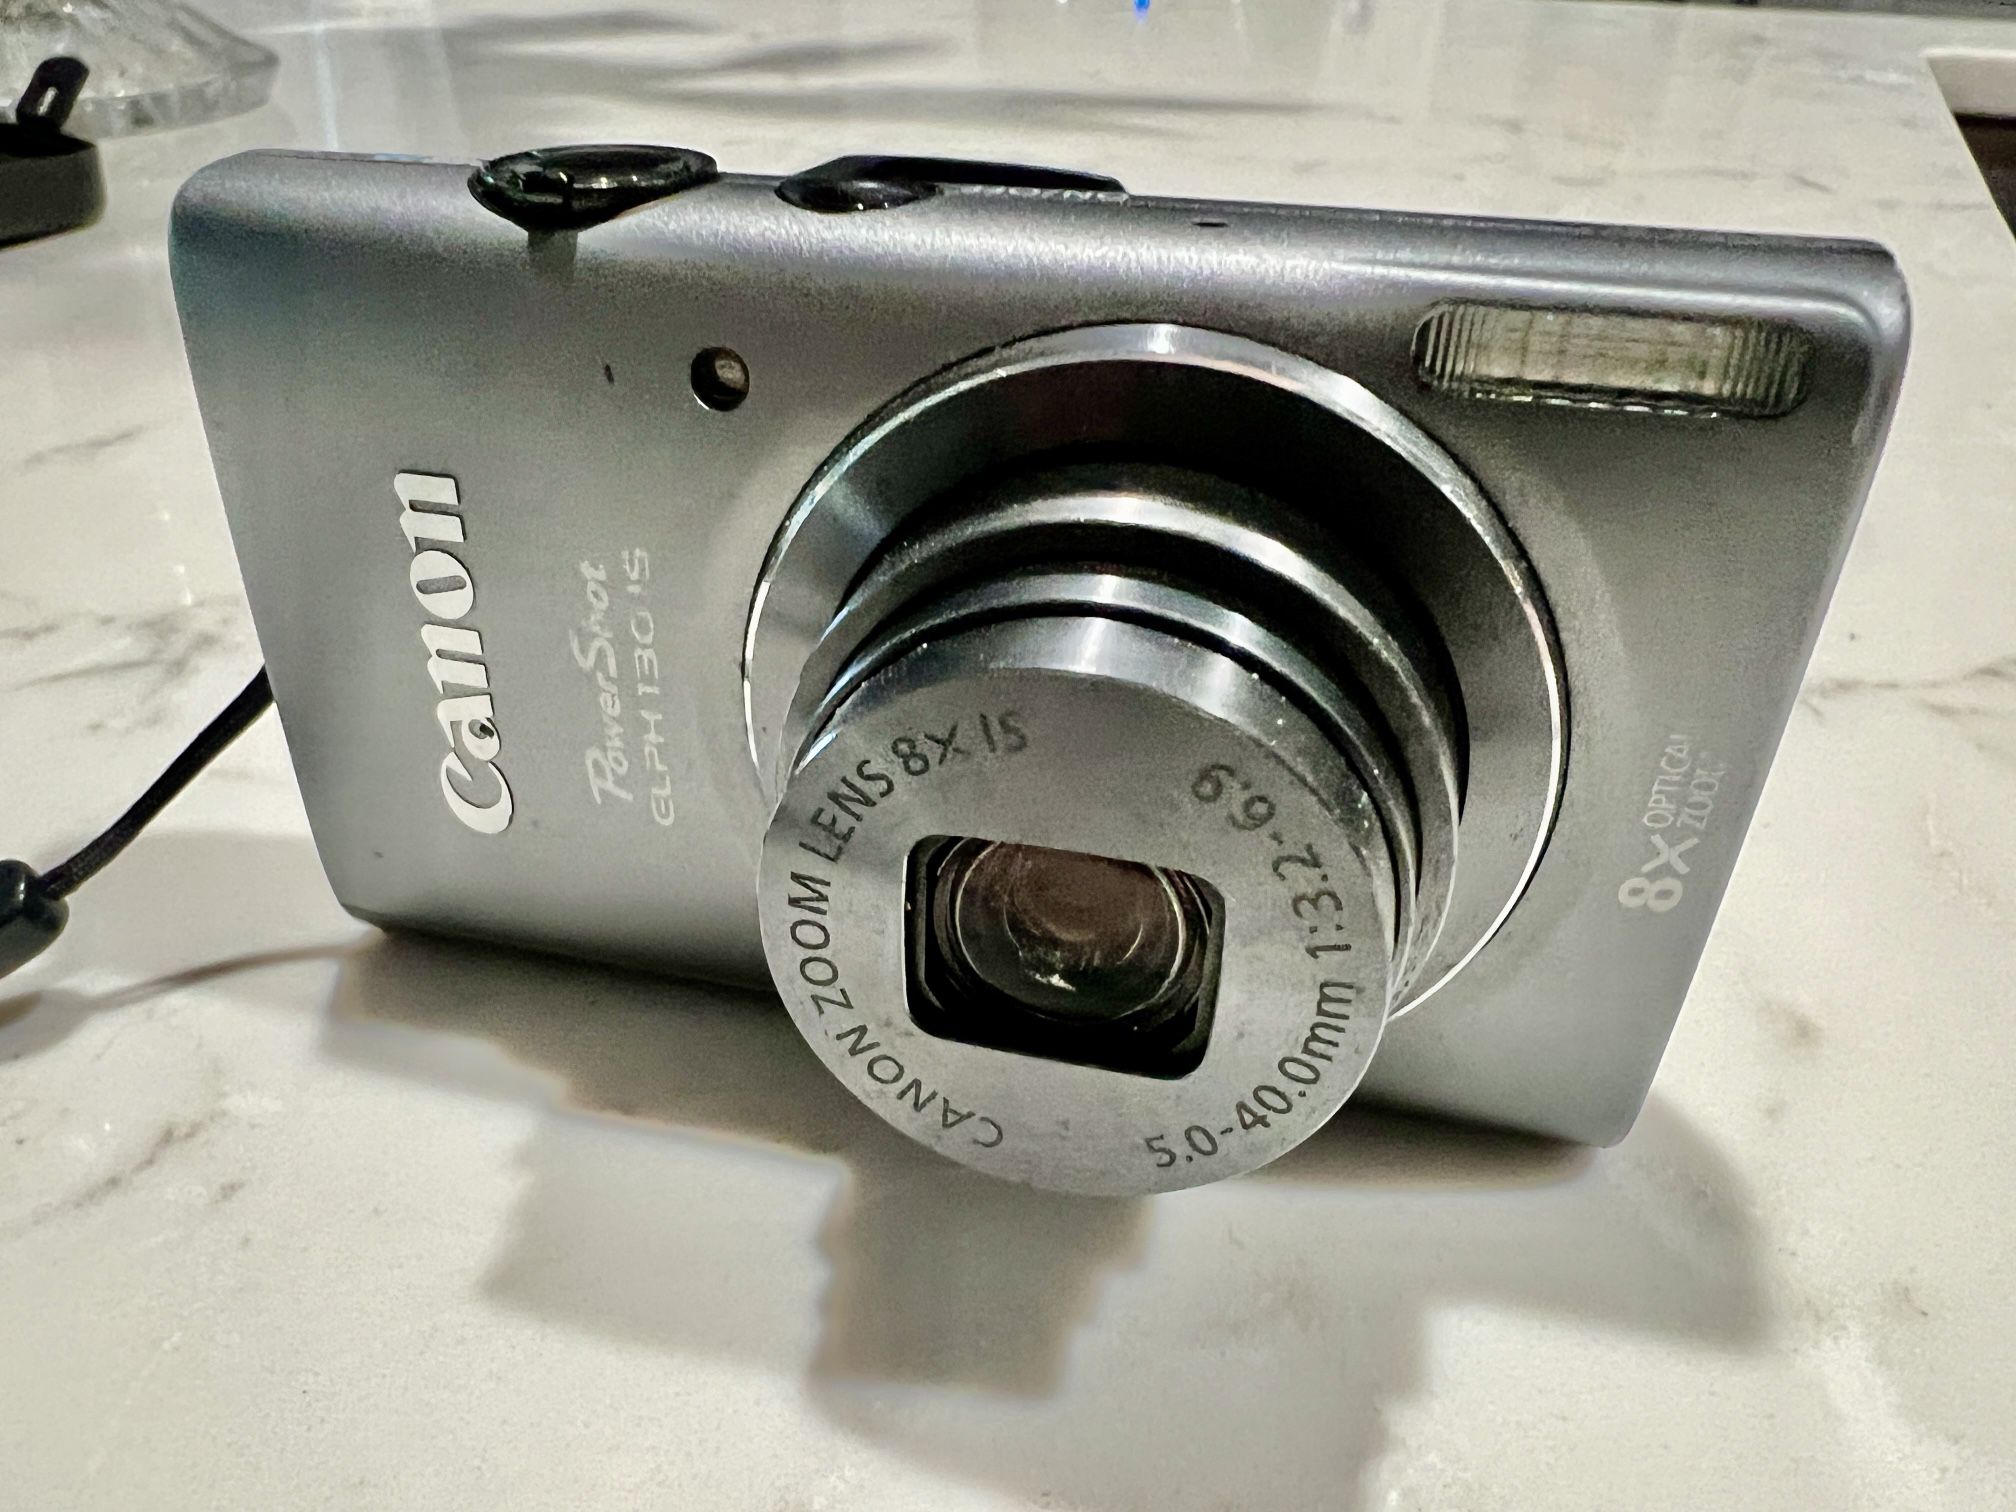 Canon PowerShot ELPH 130 IS